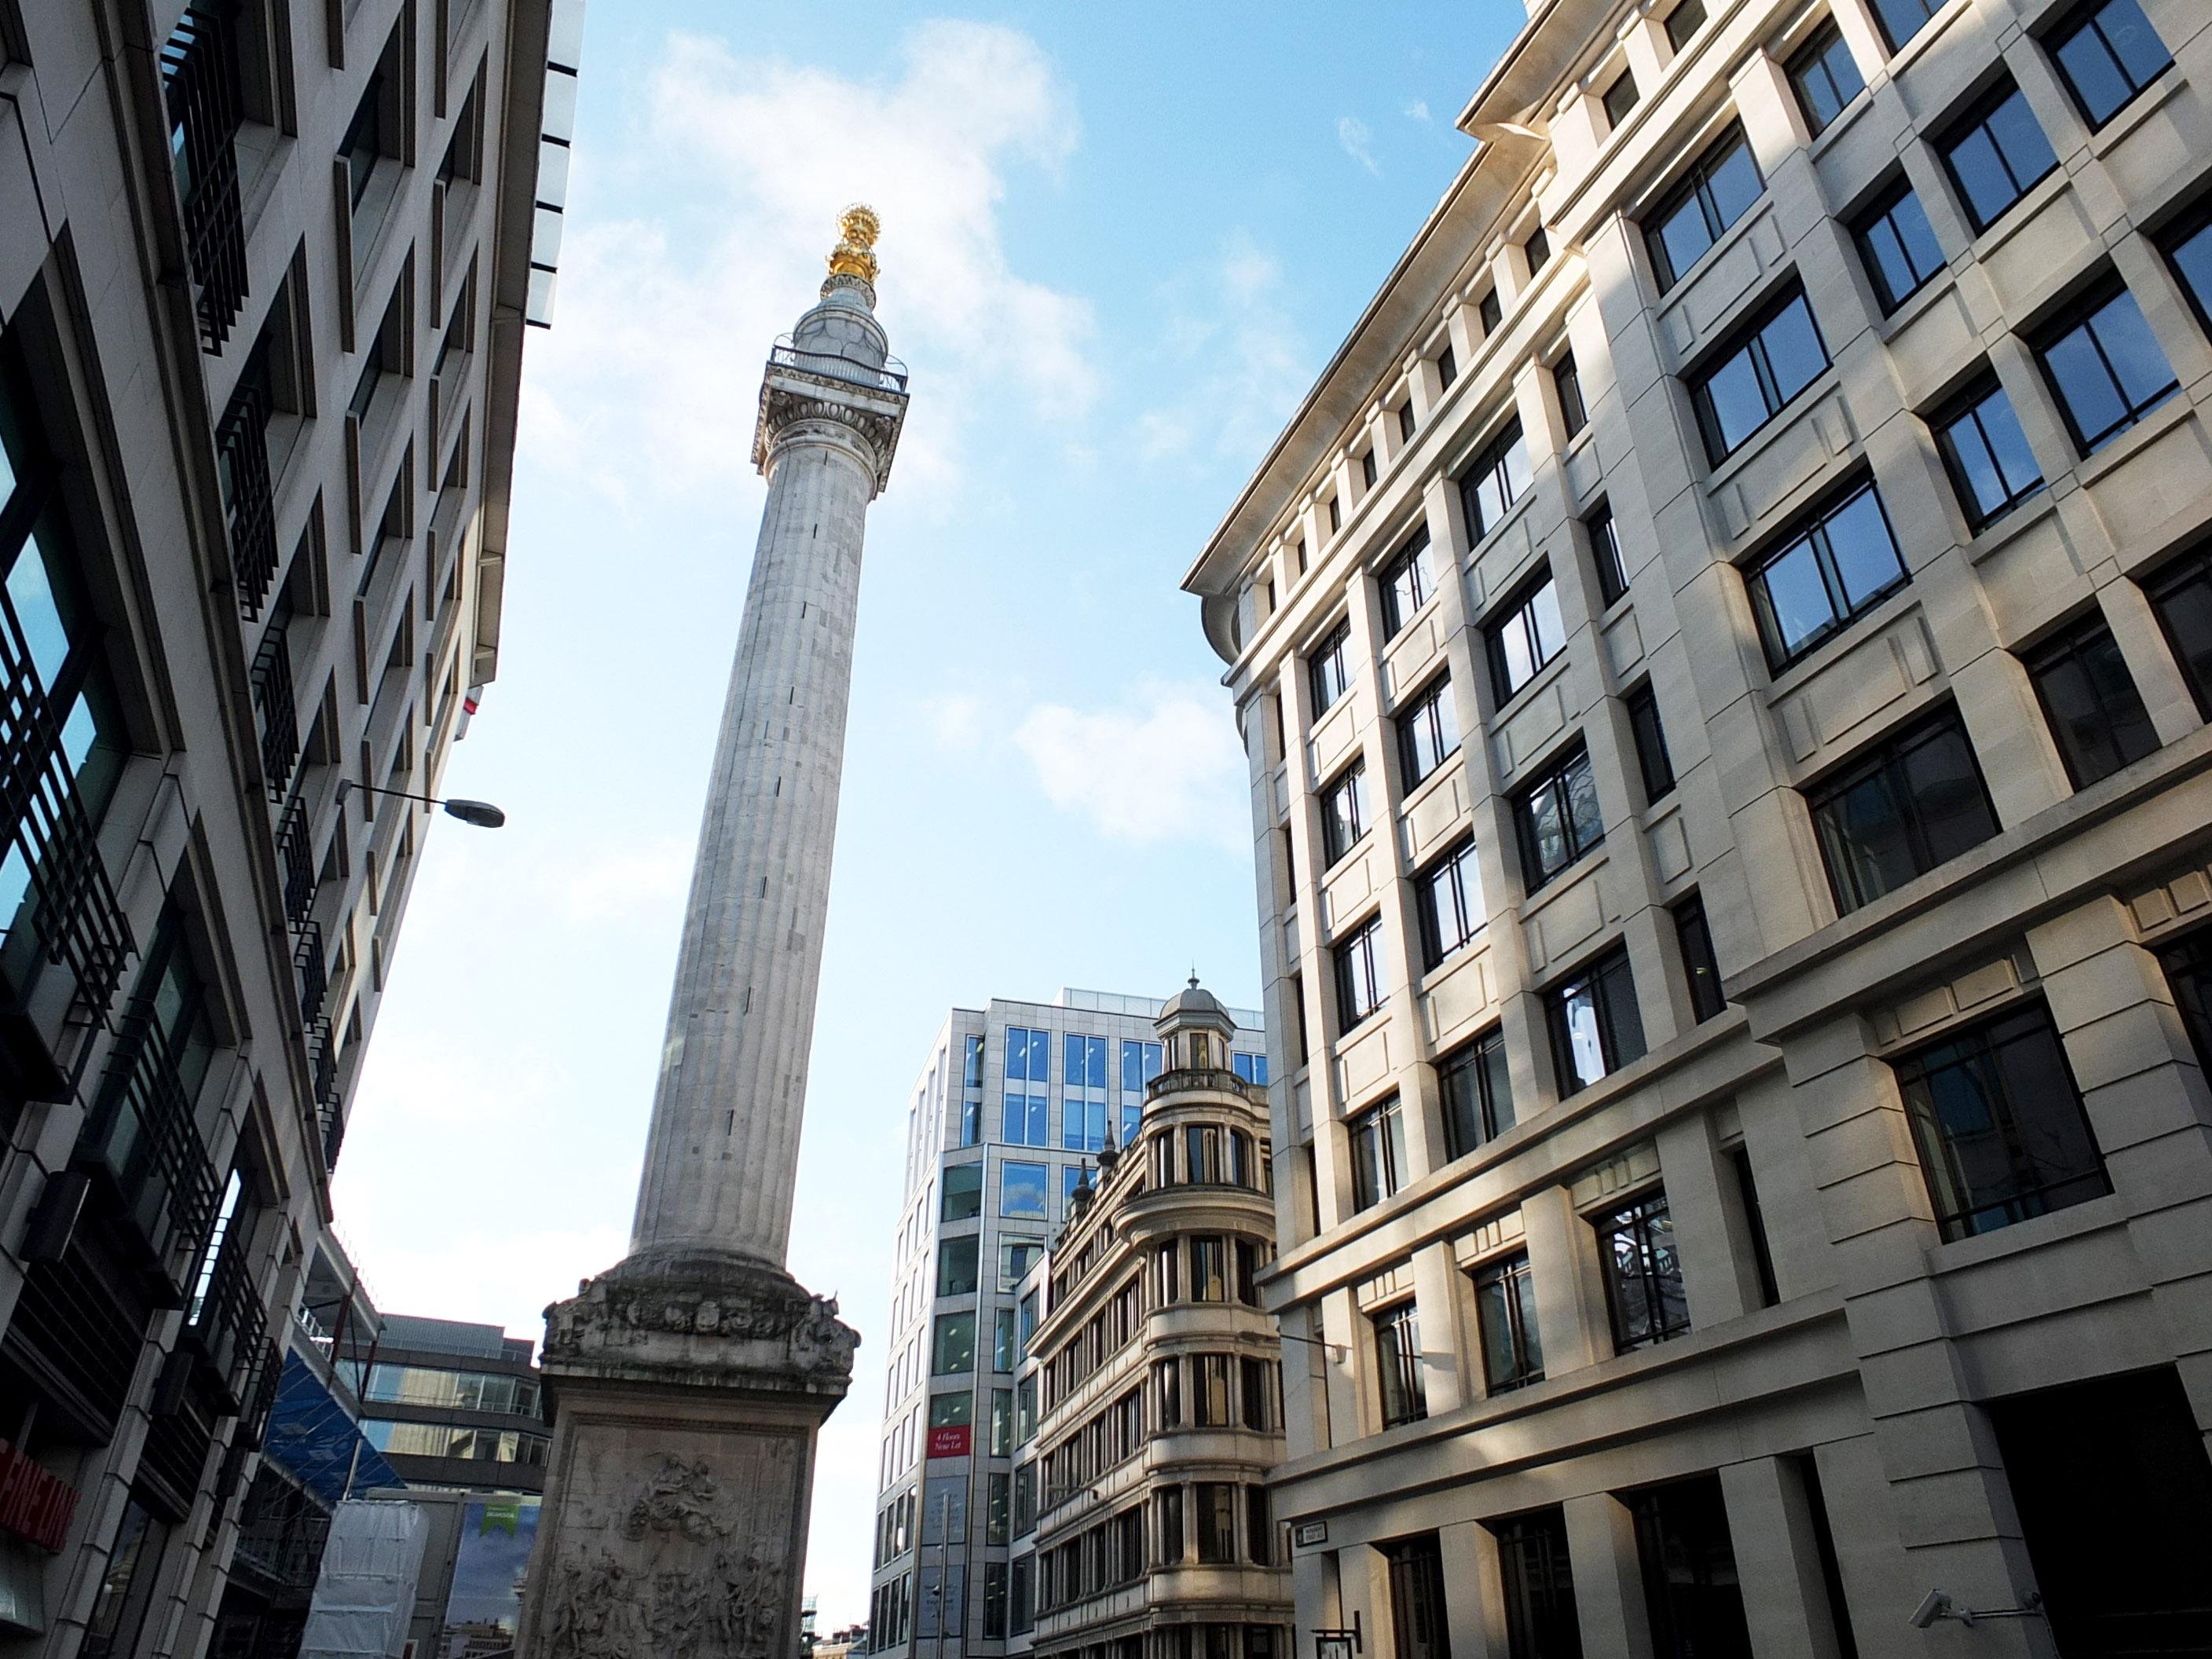 Ticket tower. The Monument в Лондоне. The Monument to the great Fire of London. Монумент лондонскому пожару 1666. Рыбаков Тауэр башня.